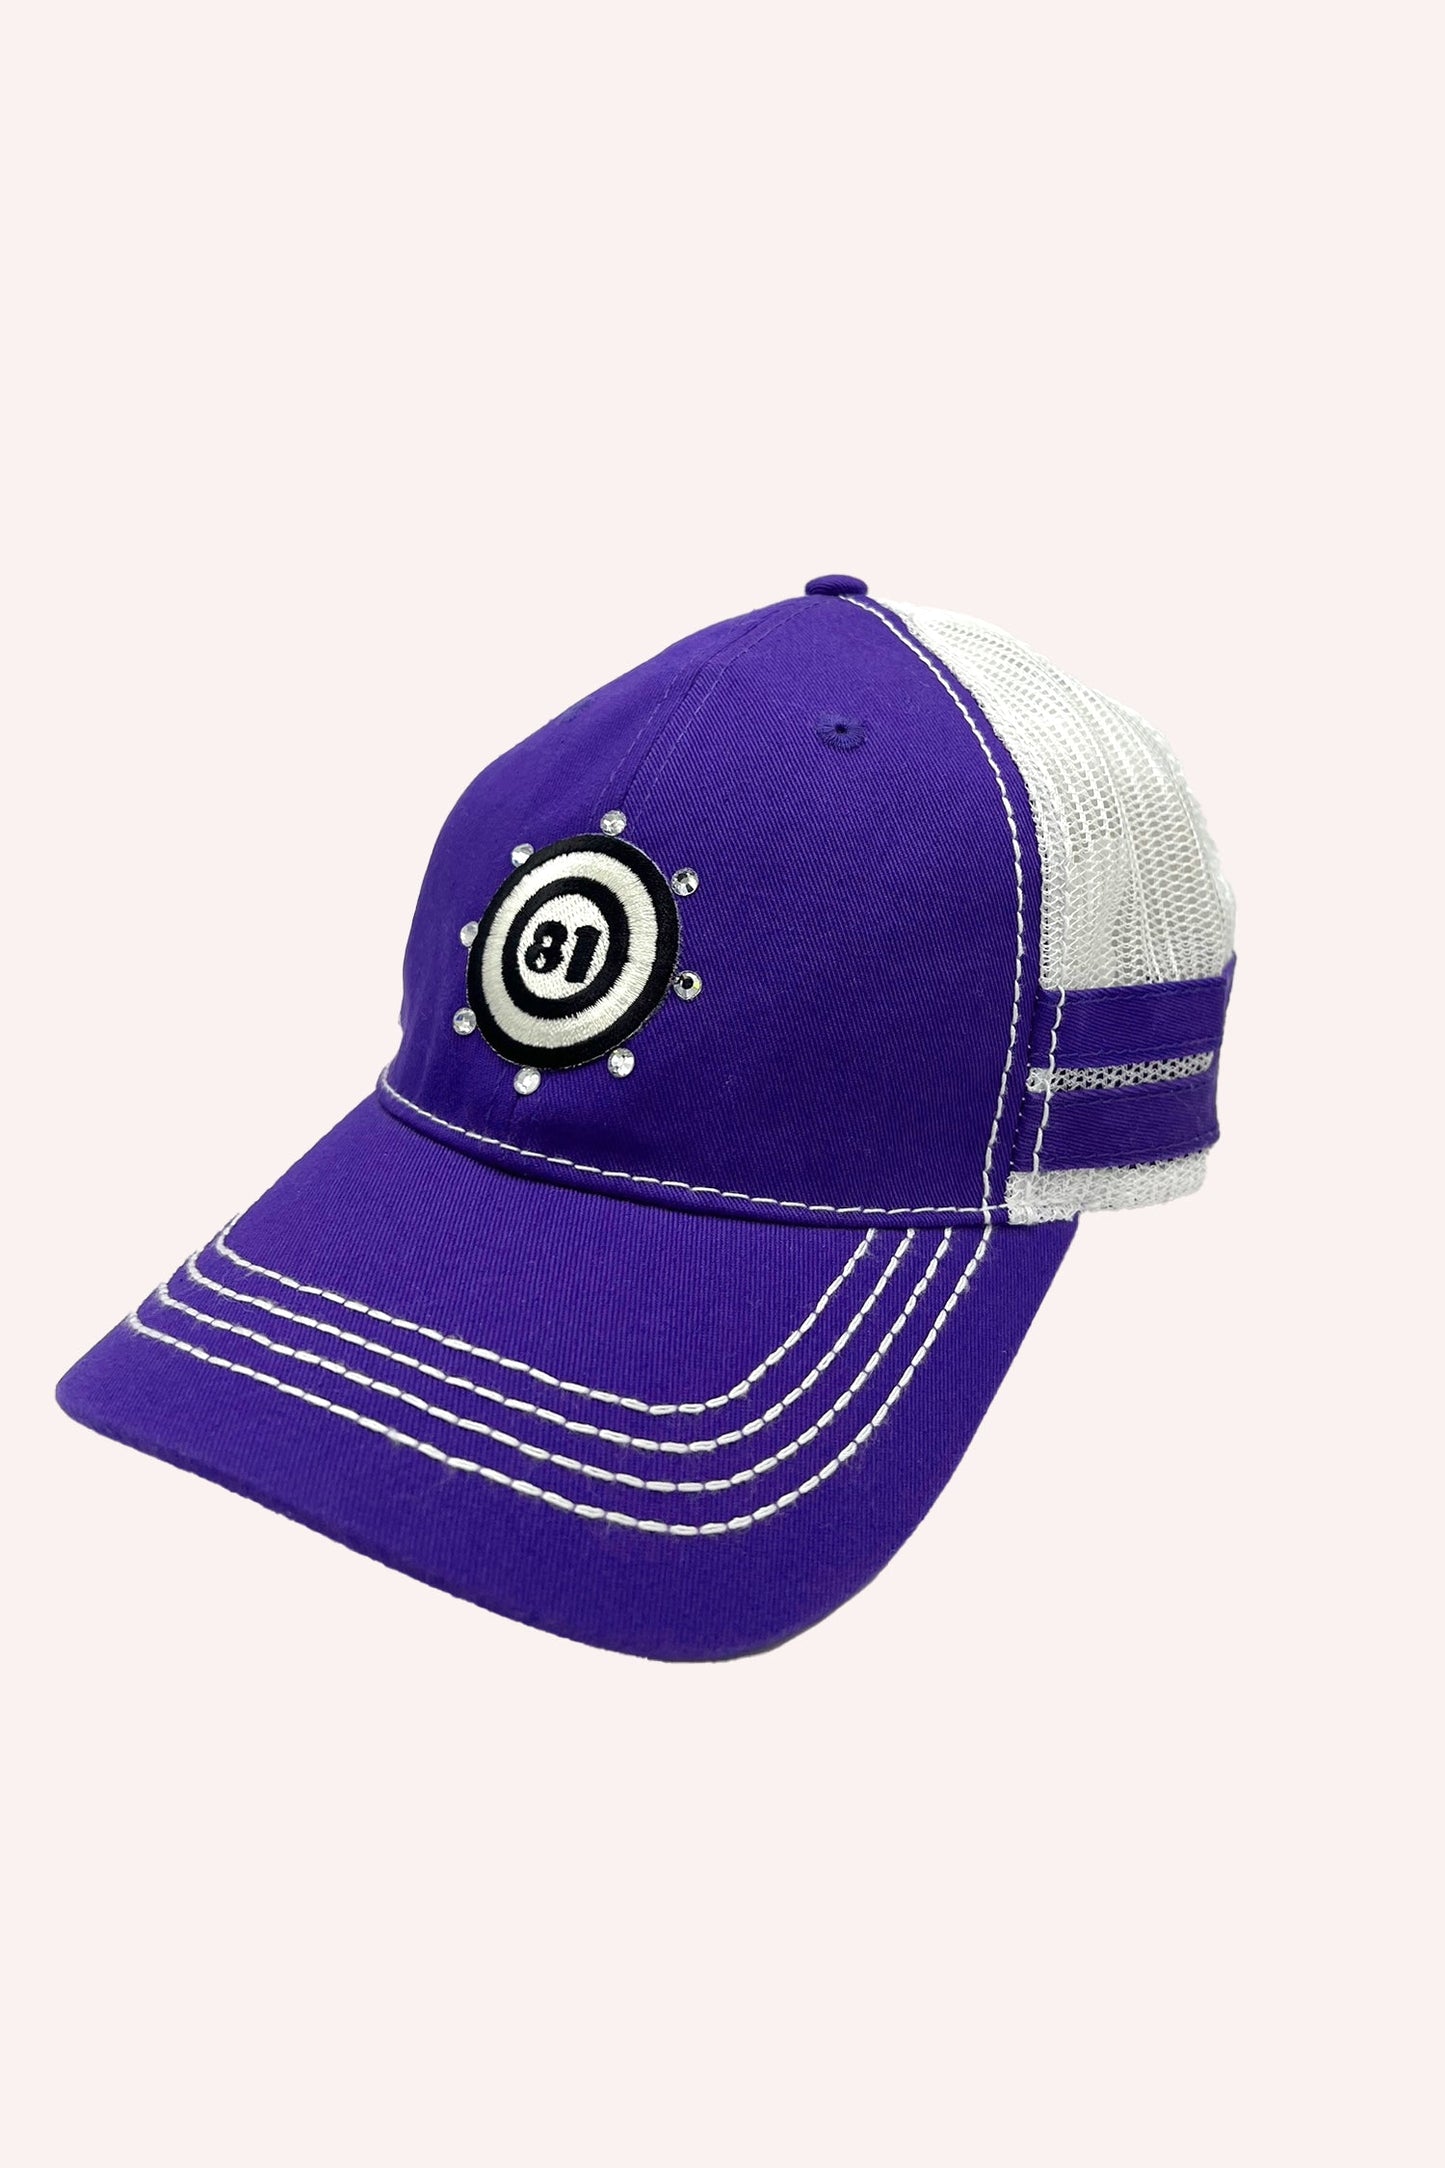 81 Trucker Hat Purple, “81” label in a black/white target, 8-clear bead around